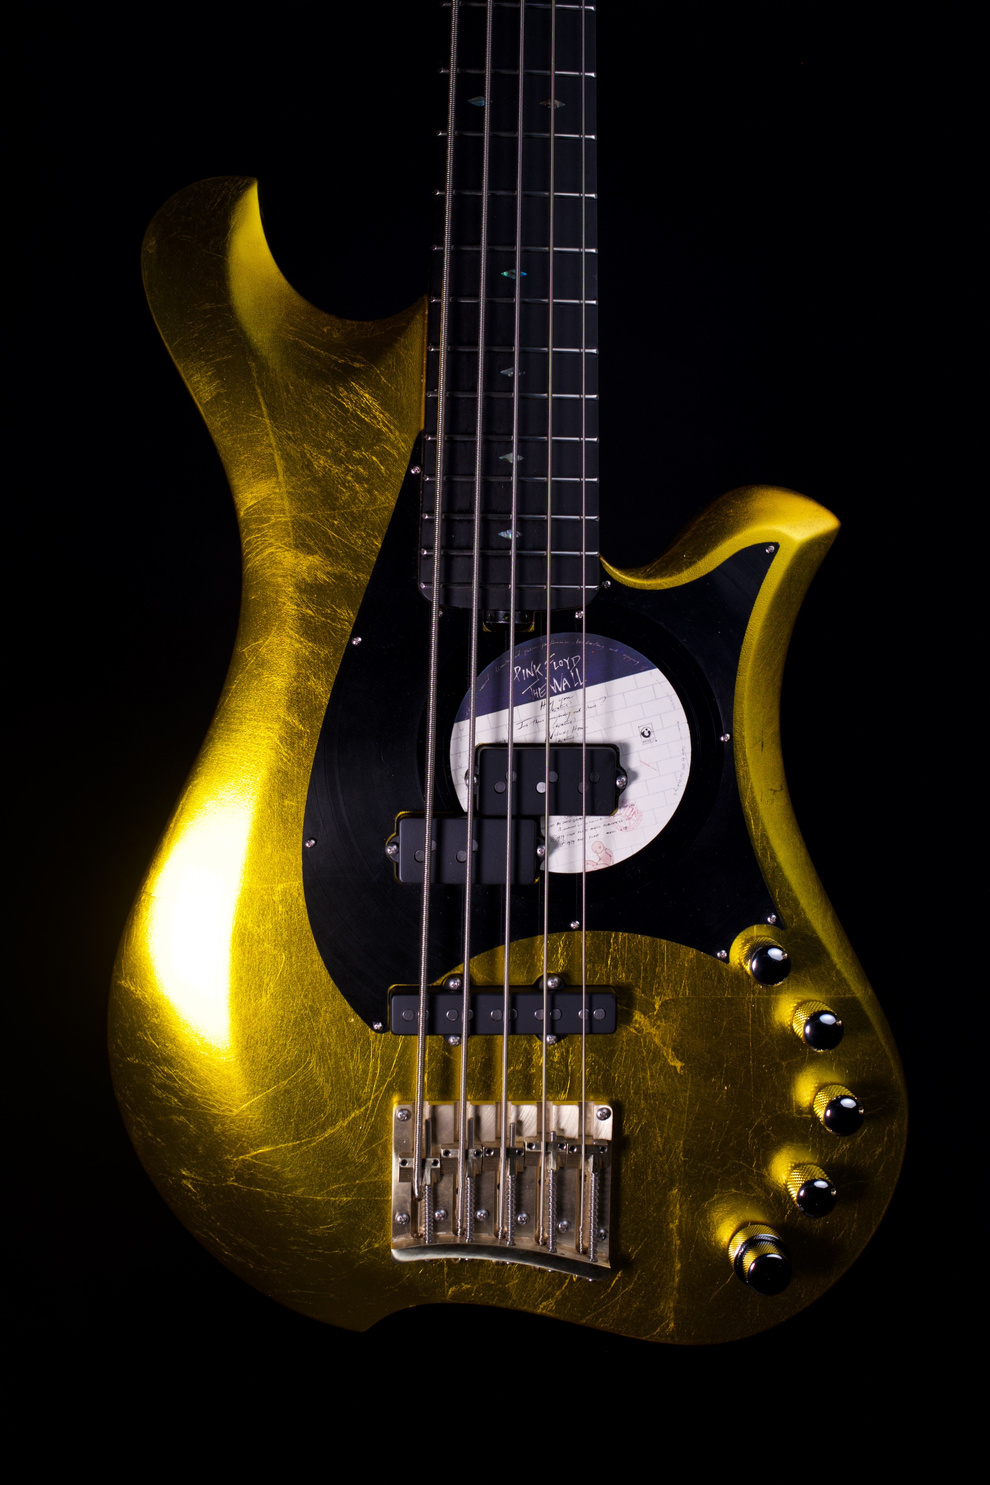 Marleo V strings Medici Gold bass, bridge detail